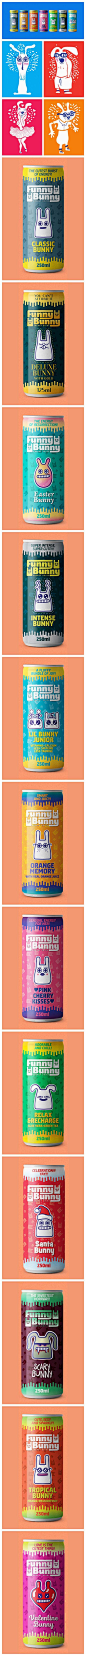 Funny Bunny兔子灵感的能量饮料品牌包装设计